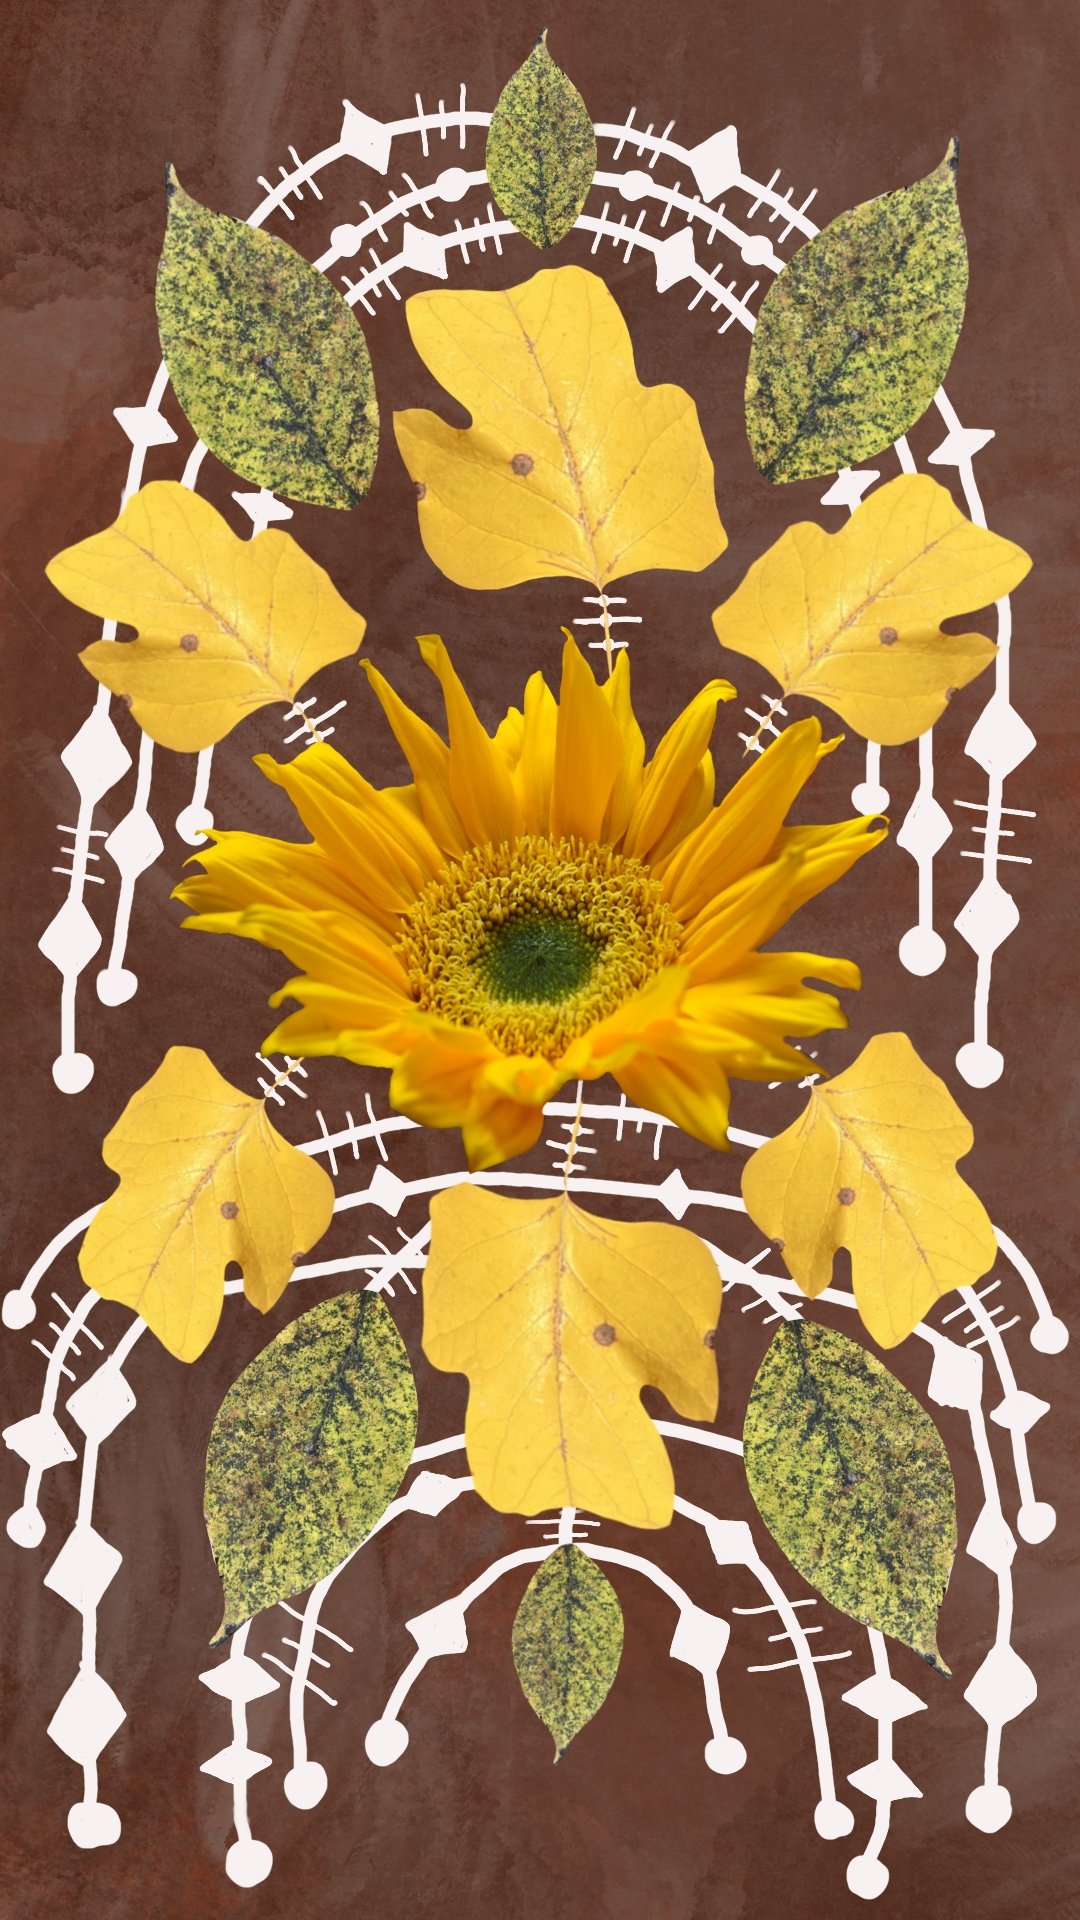 Flower base abstract — Sheila Burgos